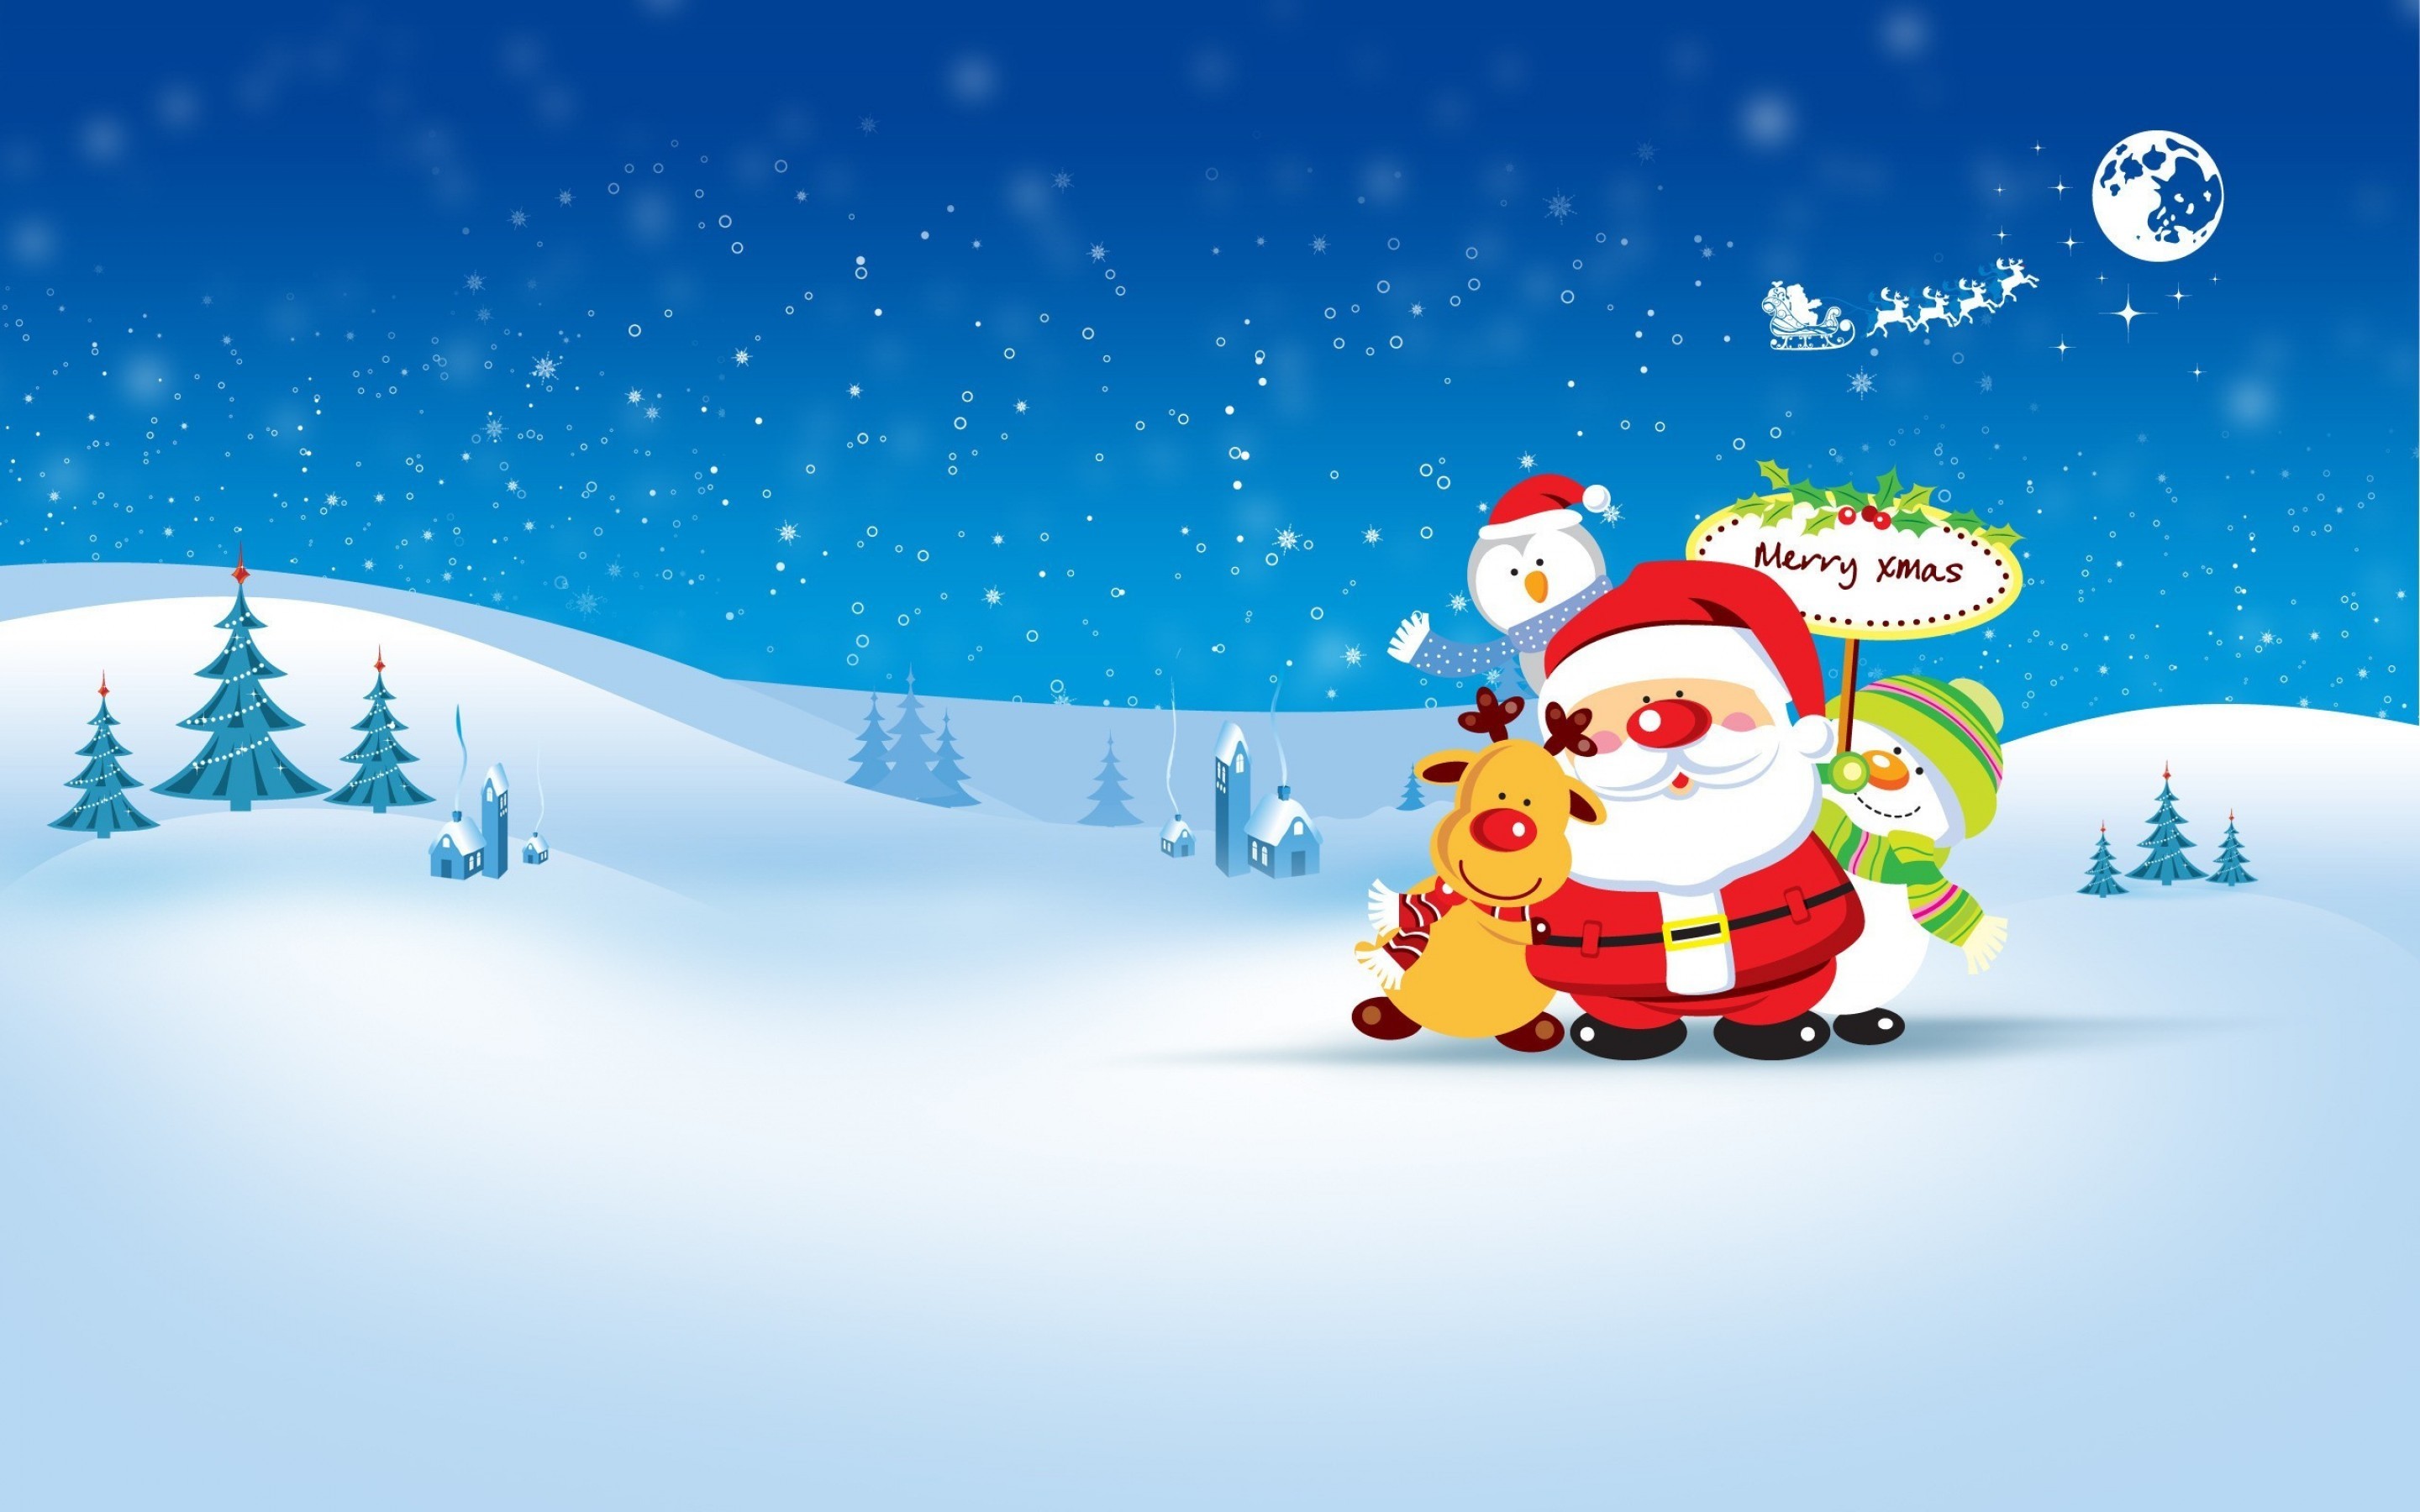 Christmas Backgrounds Free Download - PixelsTalk.Net